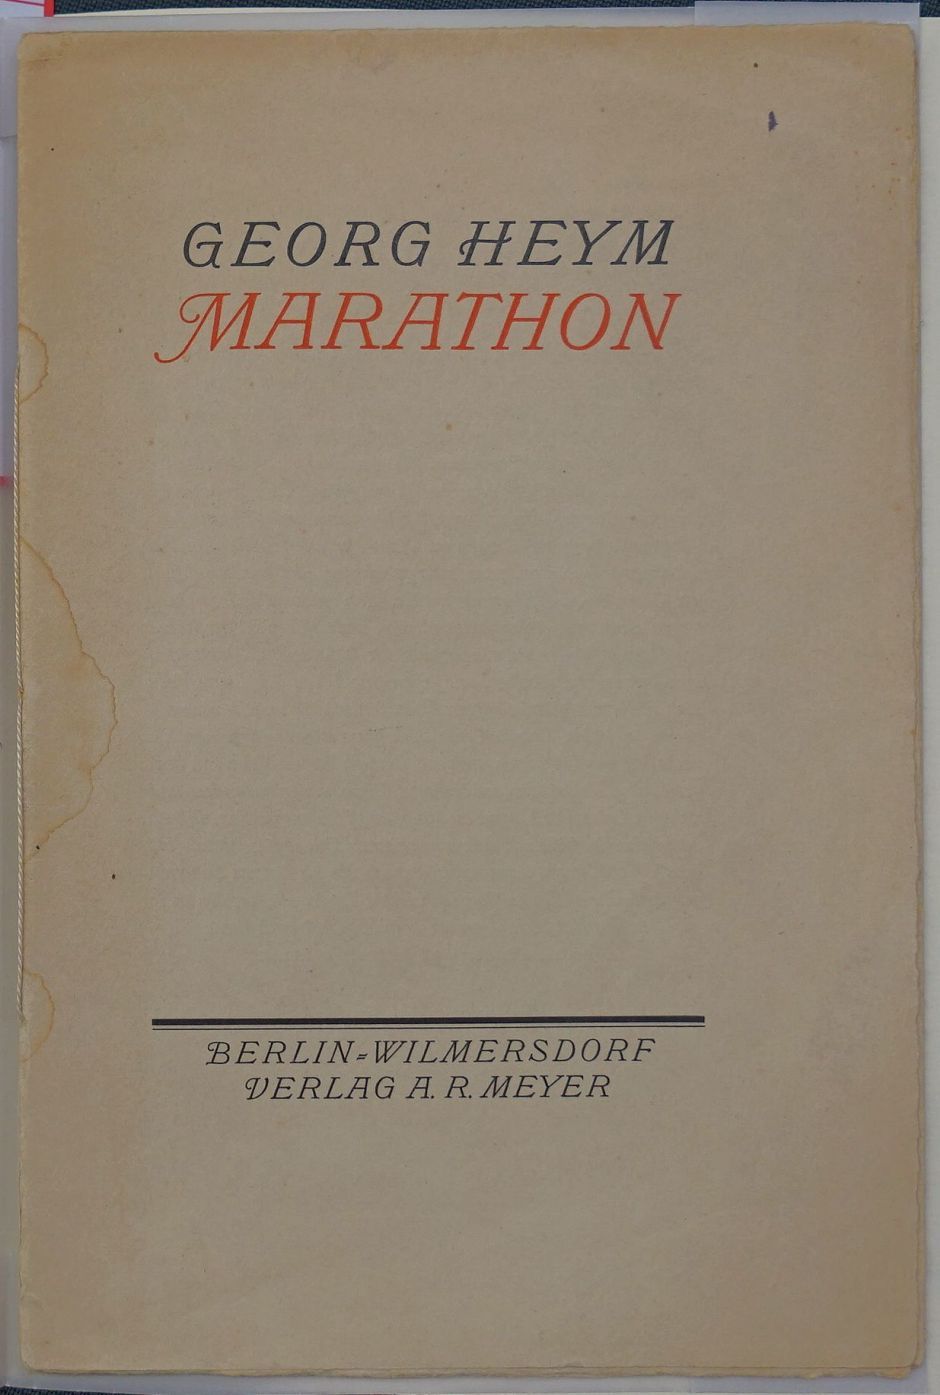 Lot 3197, Auction  115, Heym, Georg, Marathon